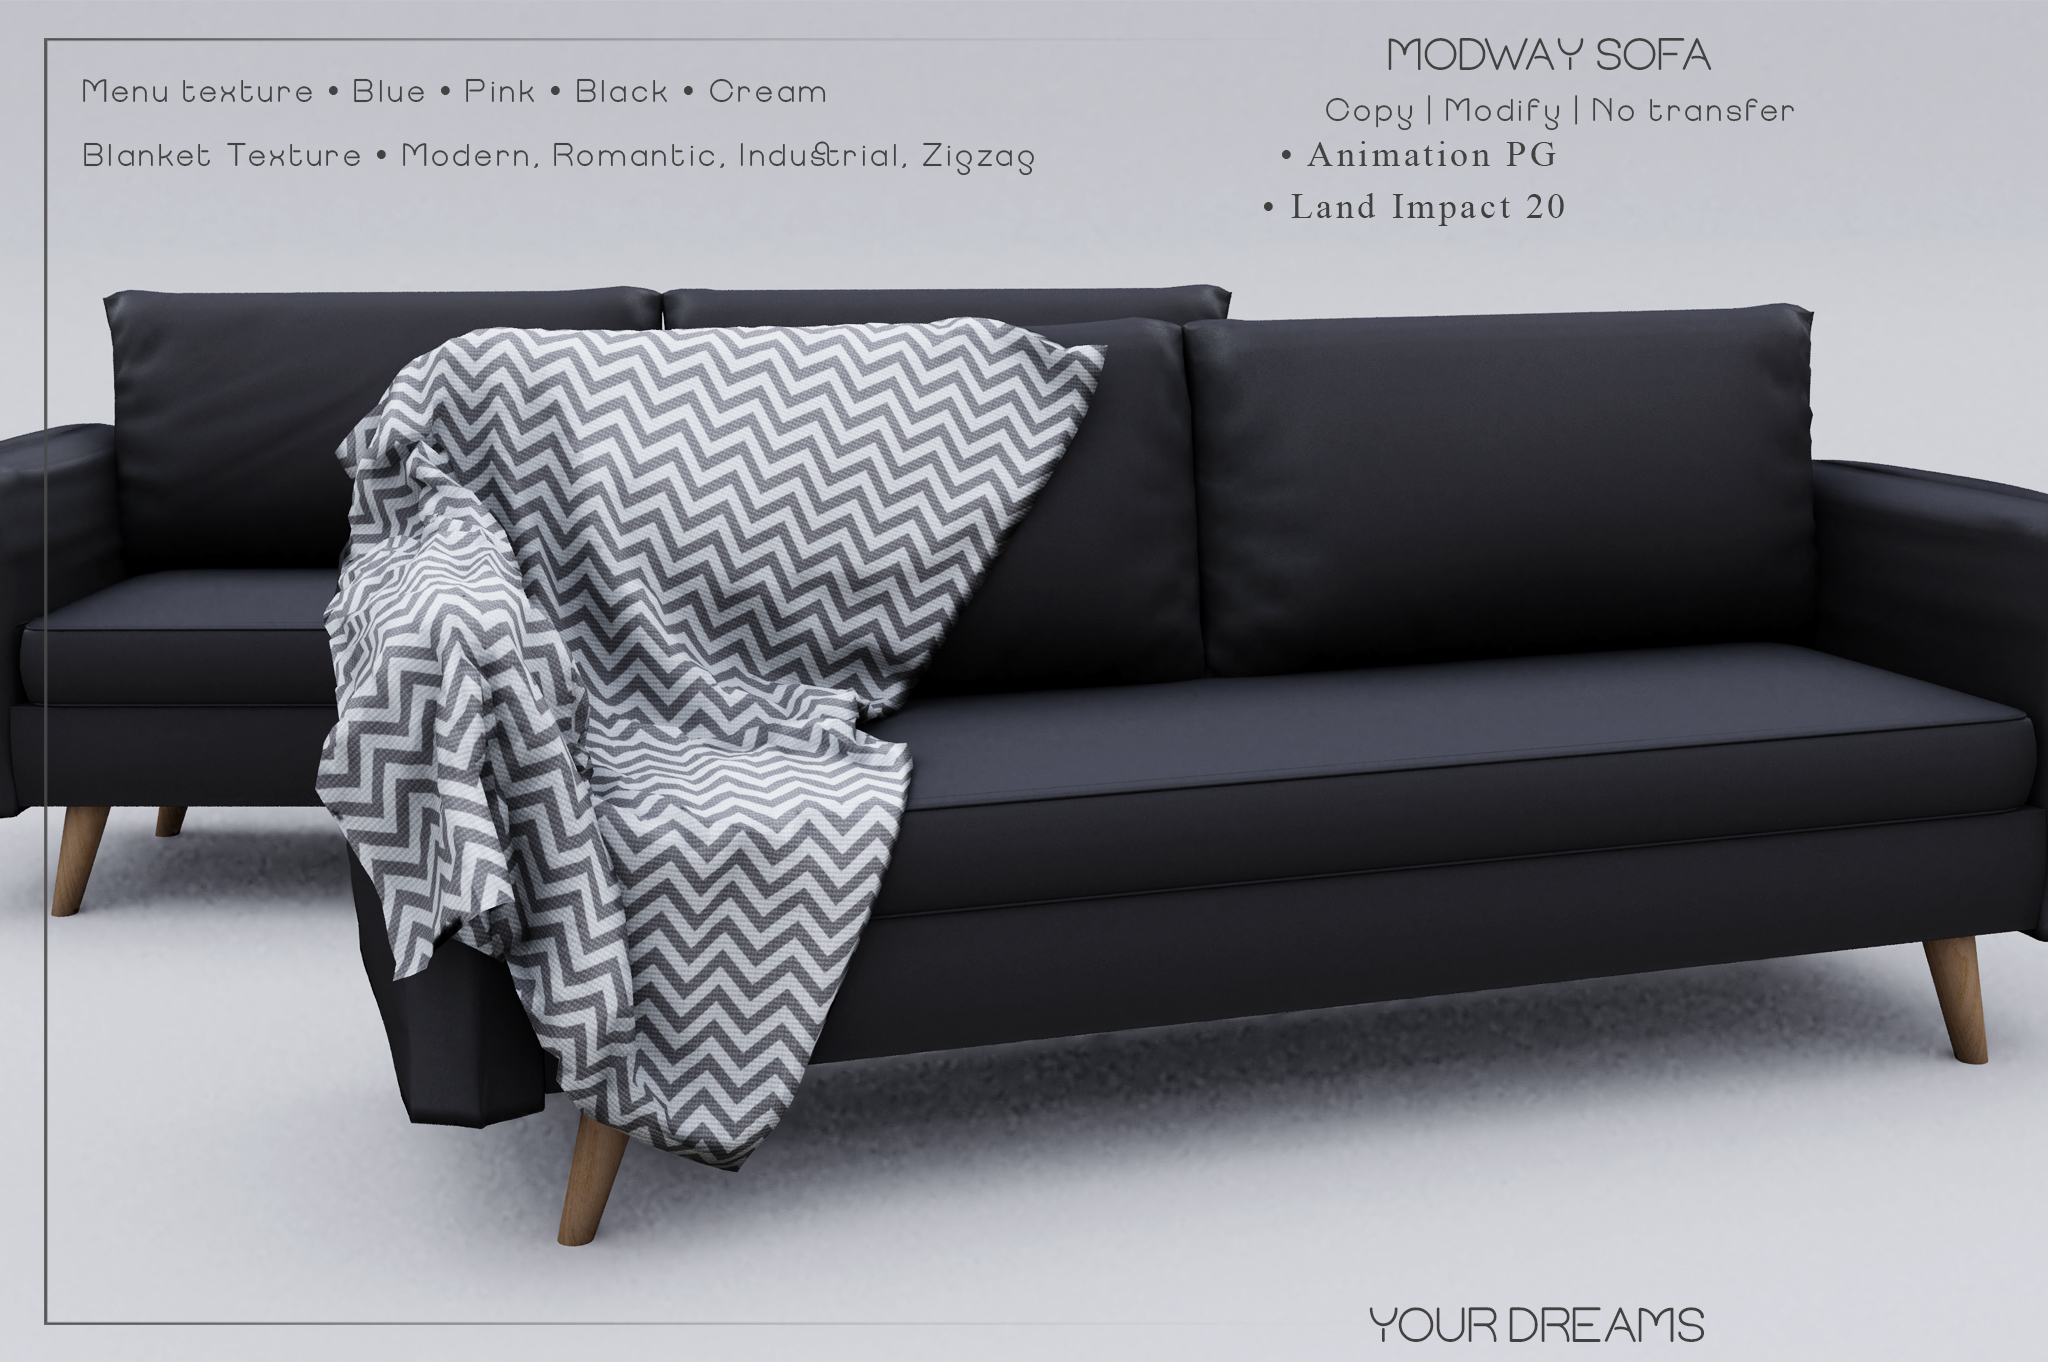 Your Dreams – Modway Sofa